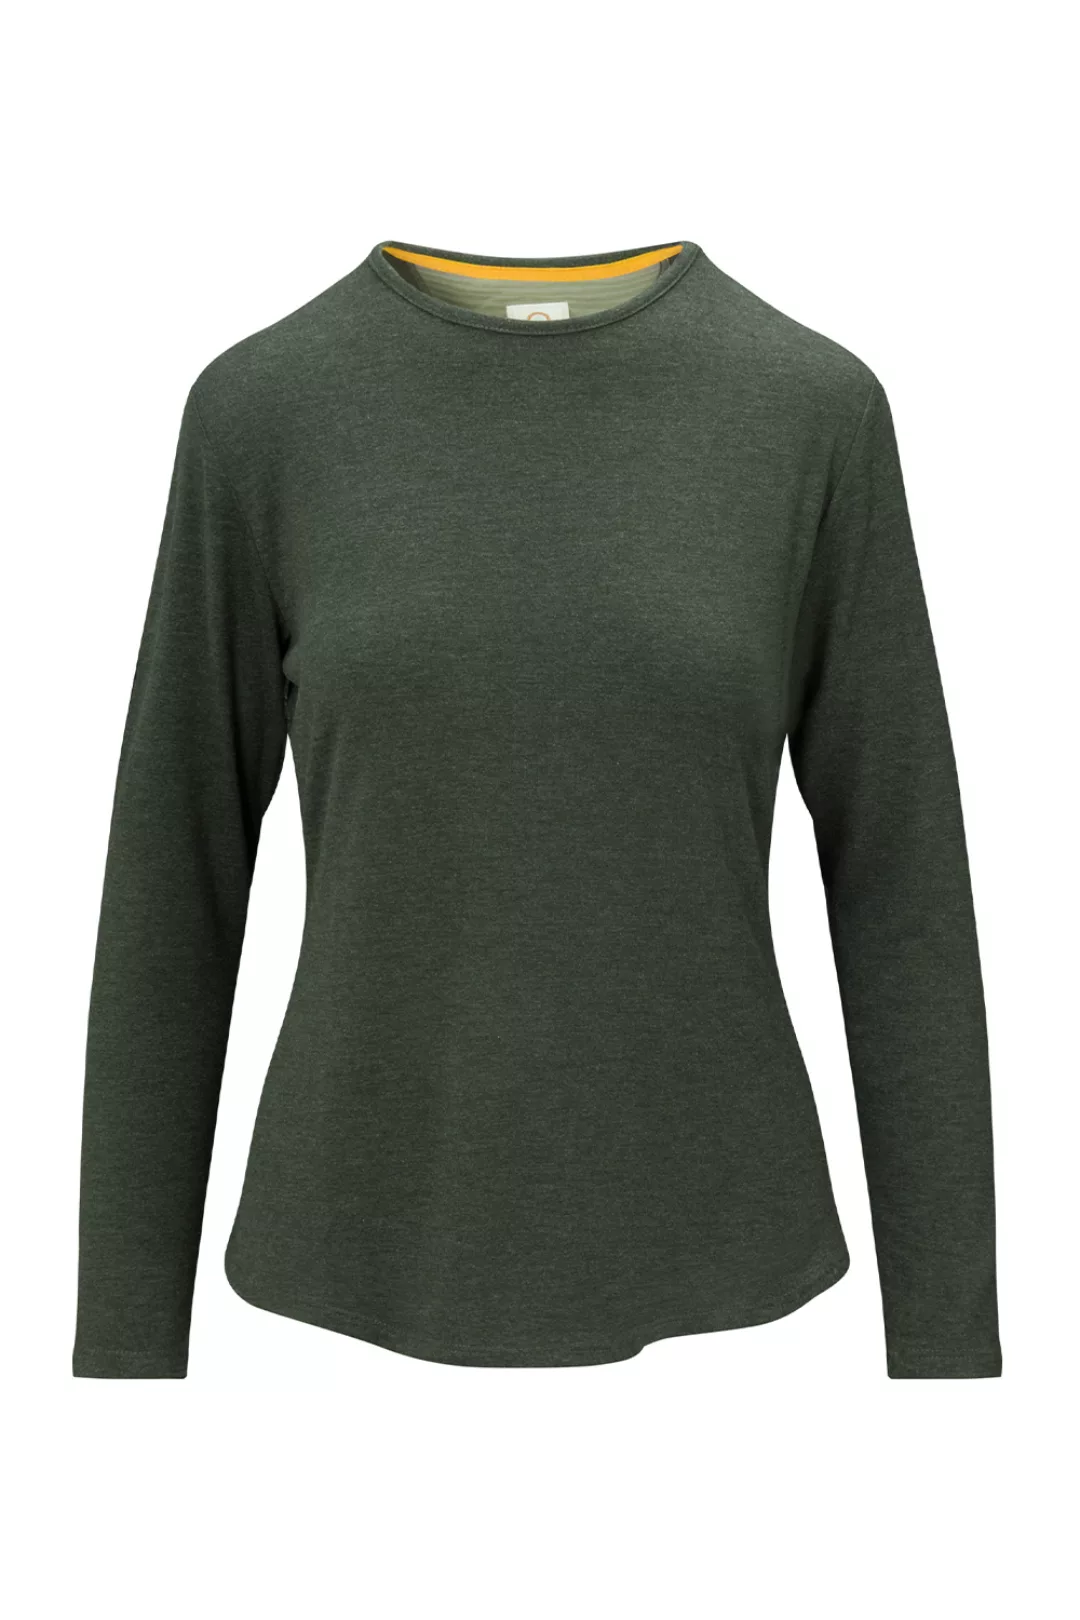 Pip Studio Tom Solid Melee Shirt langarm Loungewear 3 40 mehrfarbig günstig online kaufen